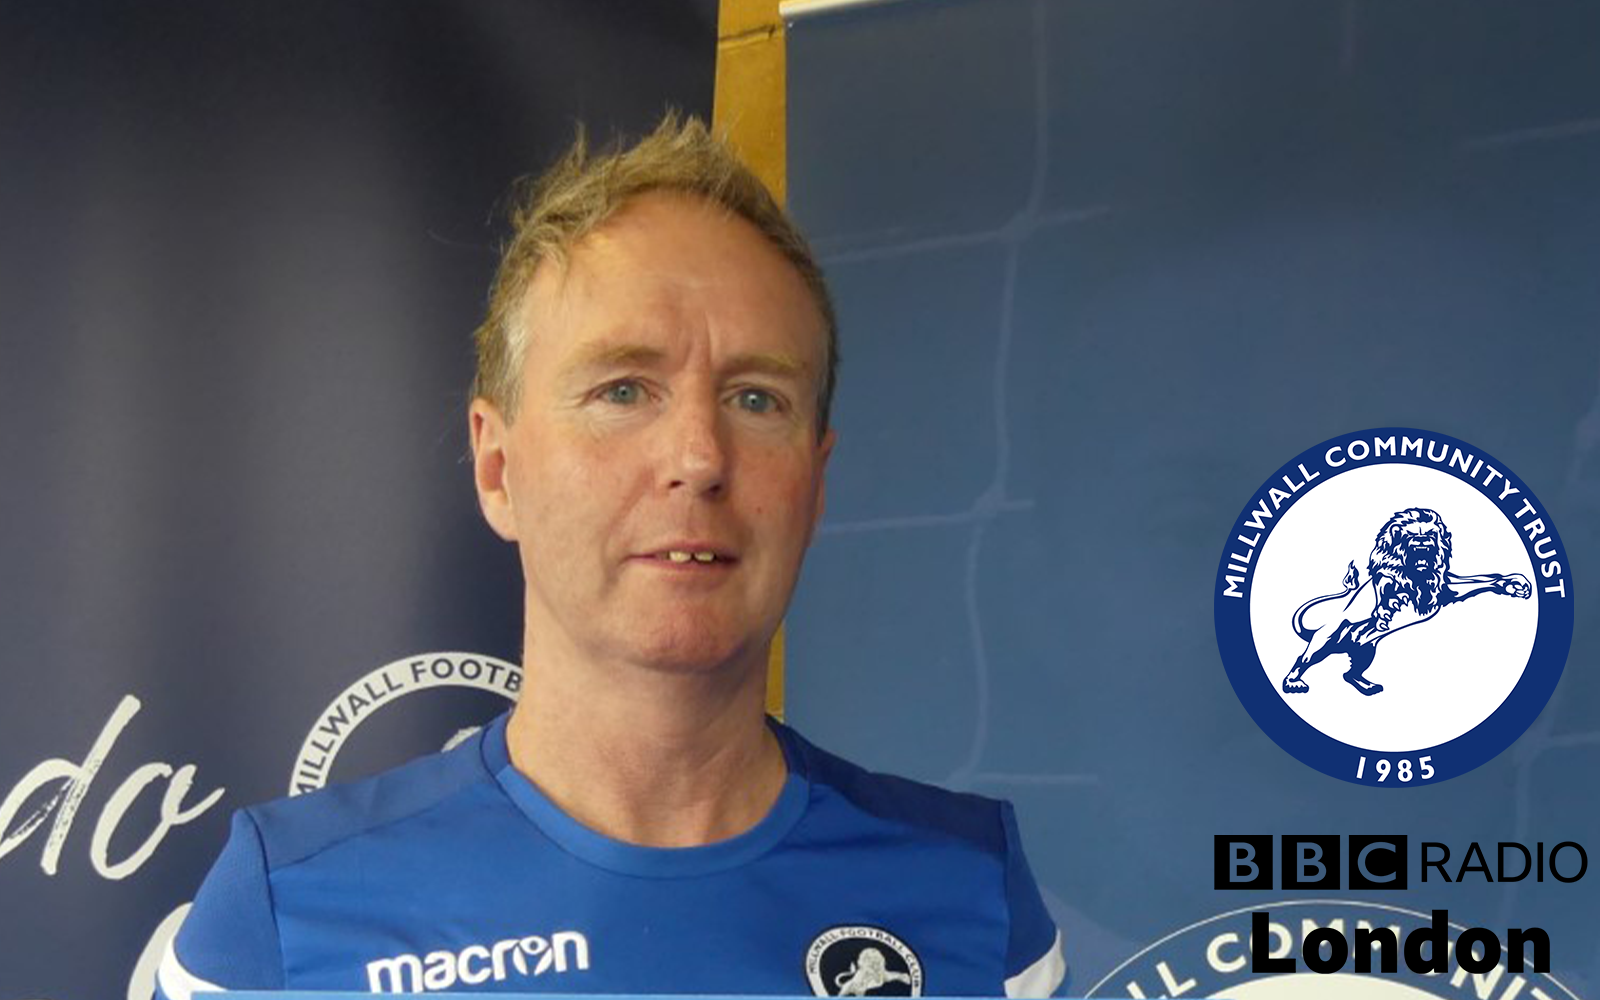 Millwall Community Trust - MCT CEO Sean Daly Live on BBC Radio London Tonight